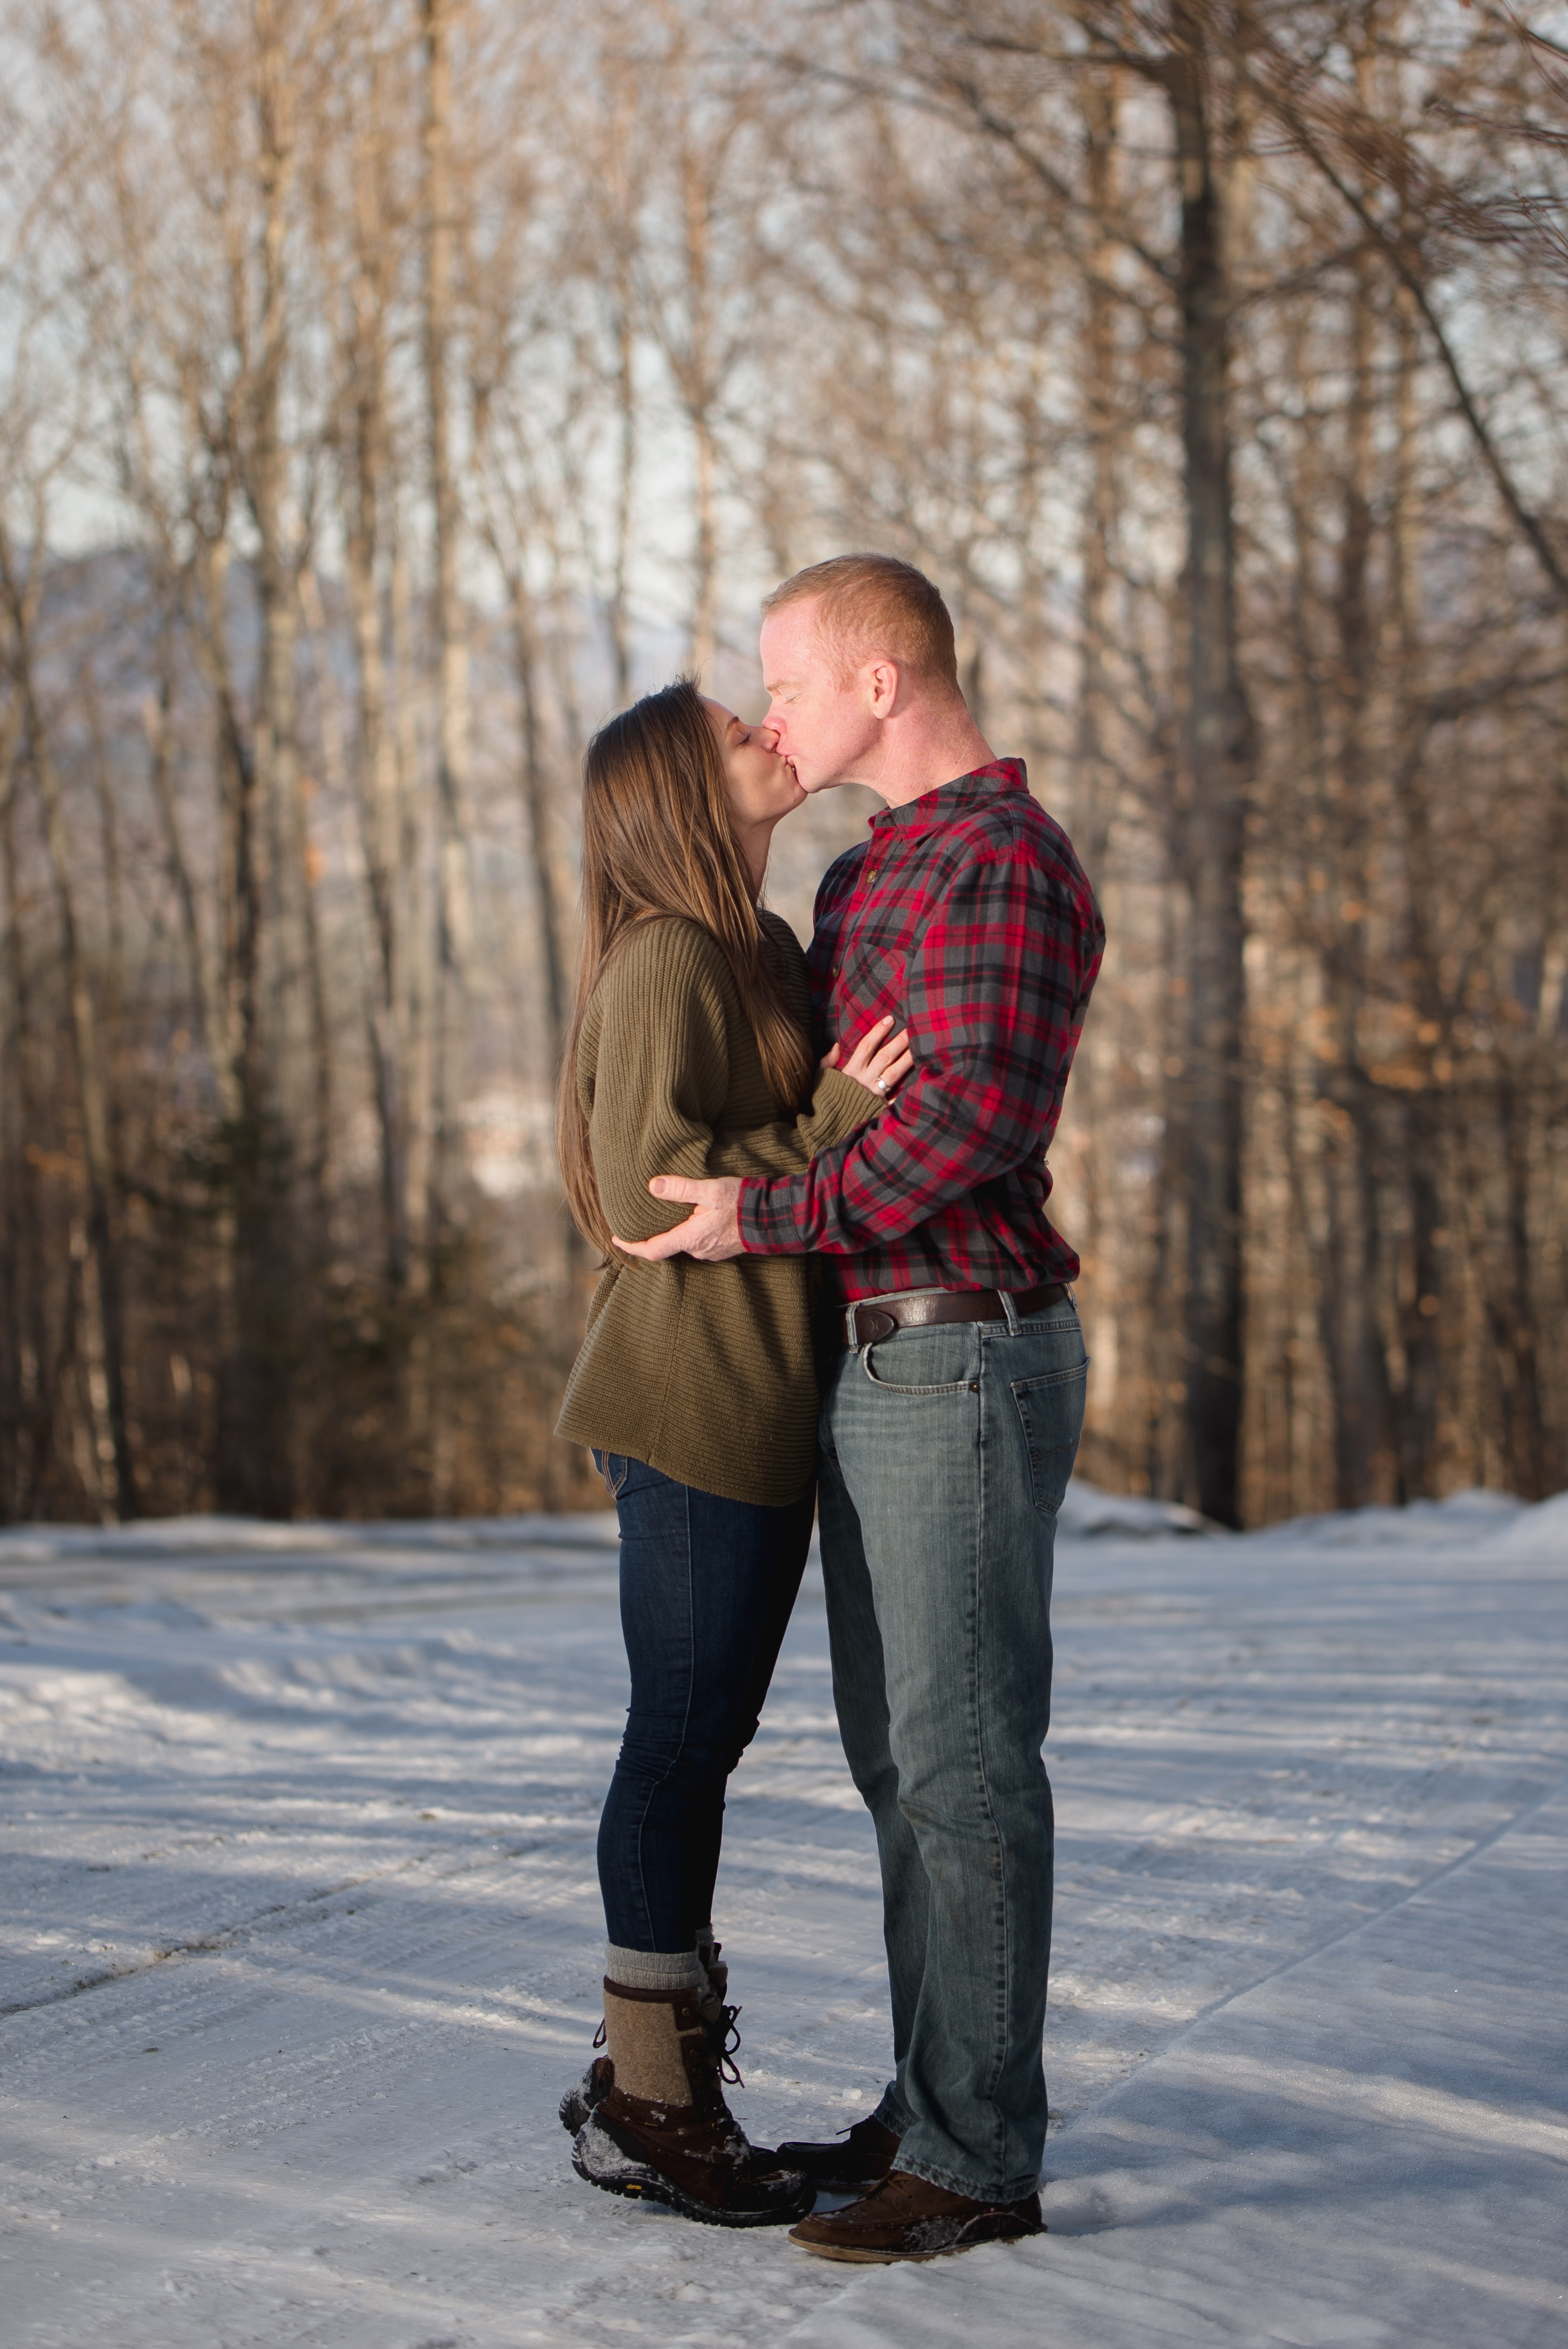 New Hampshire Engagement Photography 2 - Engagement + Couples Photography